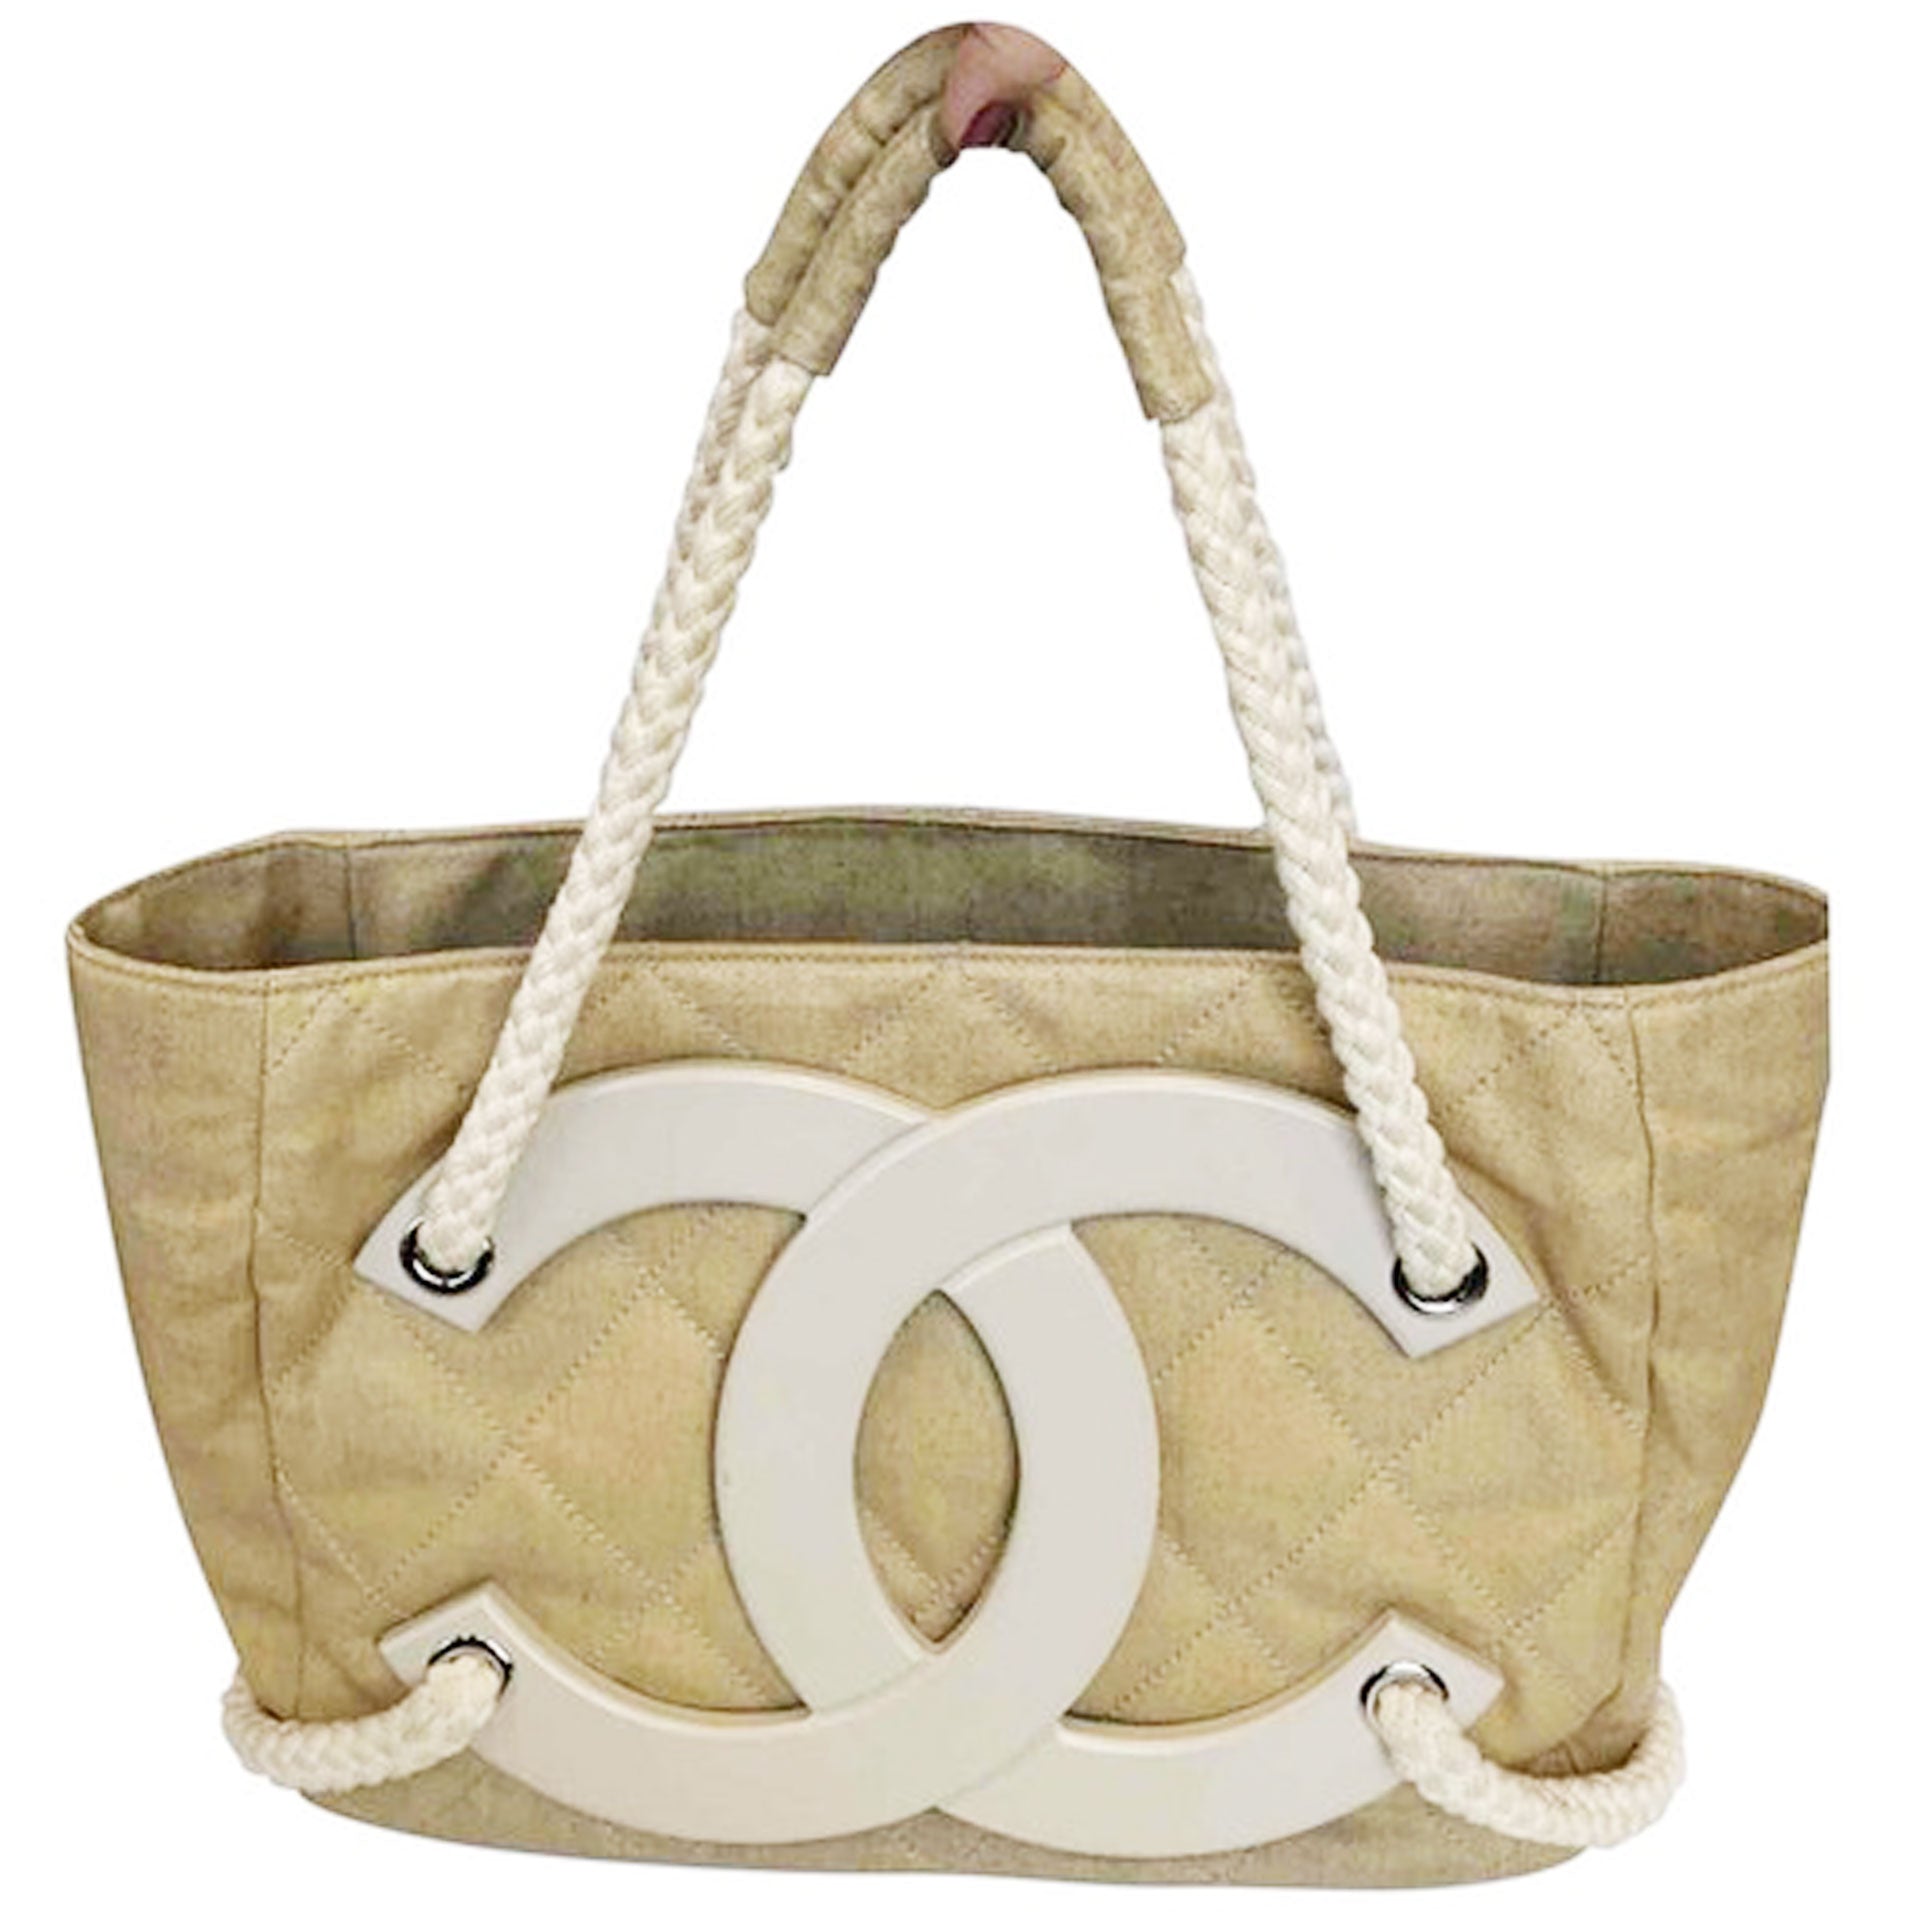 CHANEL Tote Beach Bags & Handbags for Women